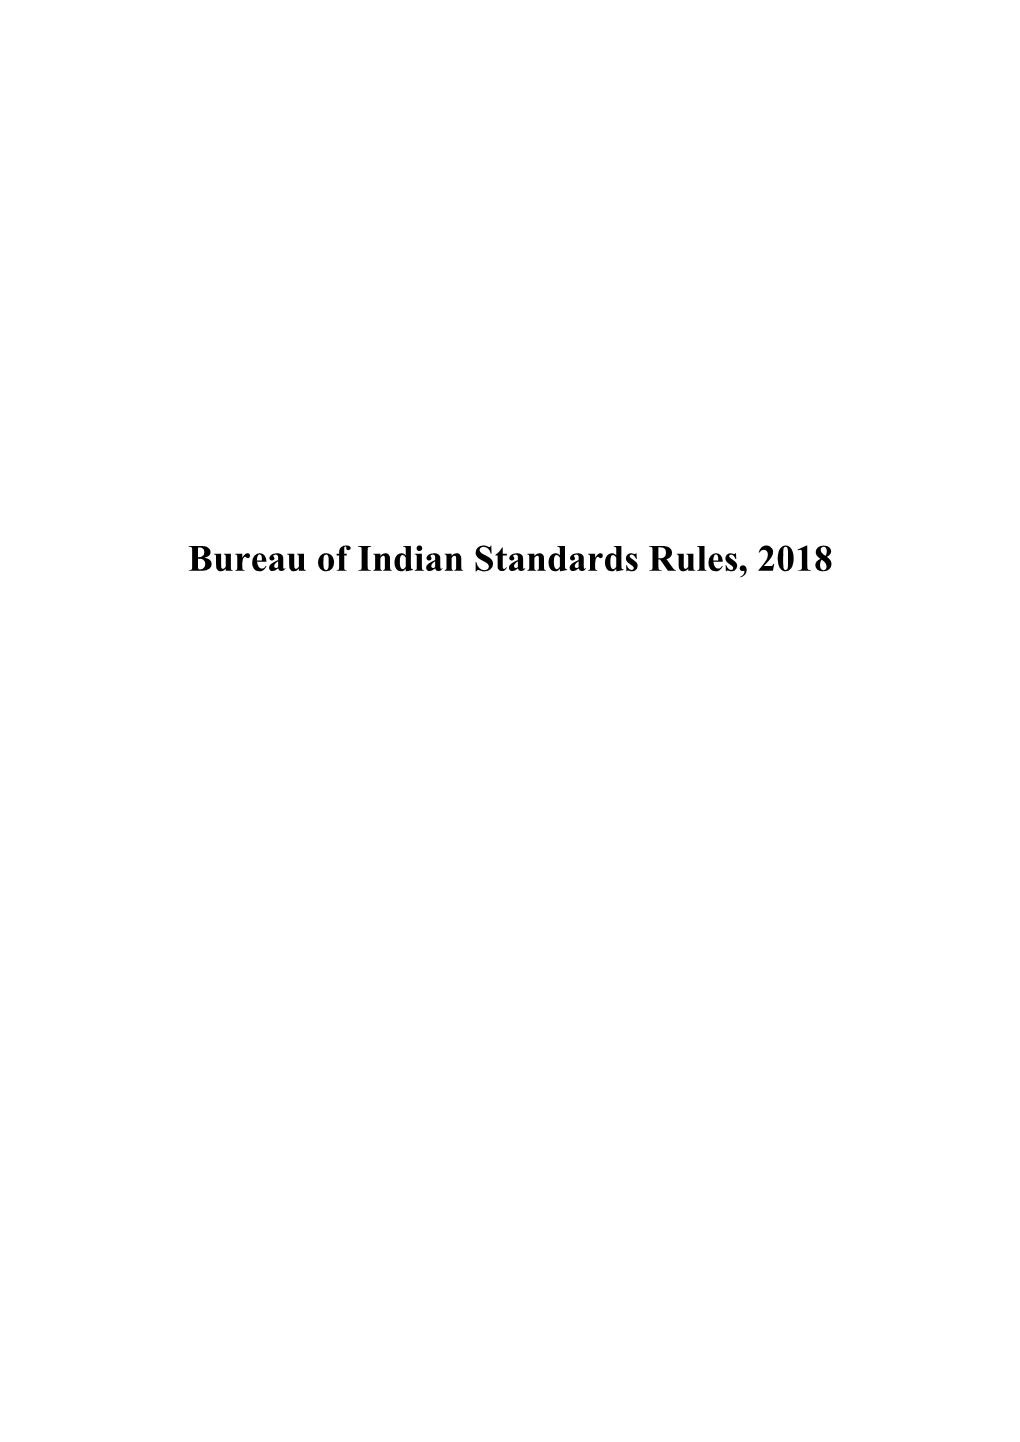 Bureau of Indian Standards Rules, 2018 16 the GAZETTE of INDIA : EXTRAORDINARY [P ART II—SEC